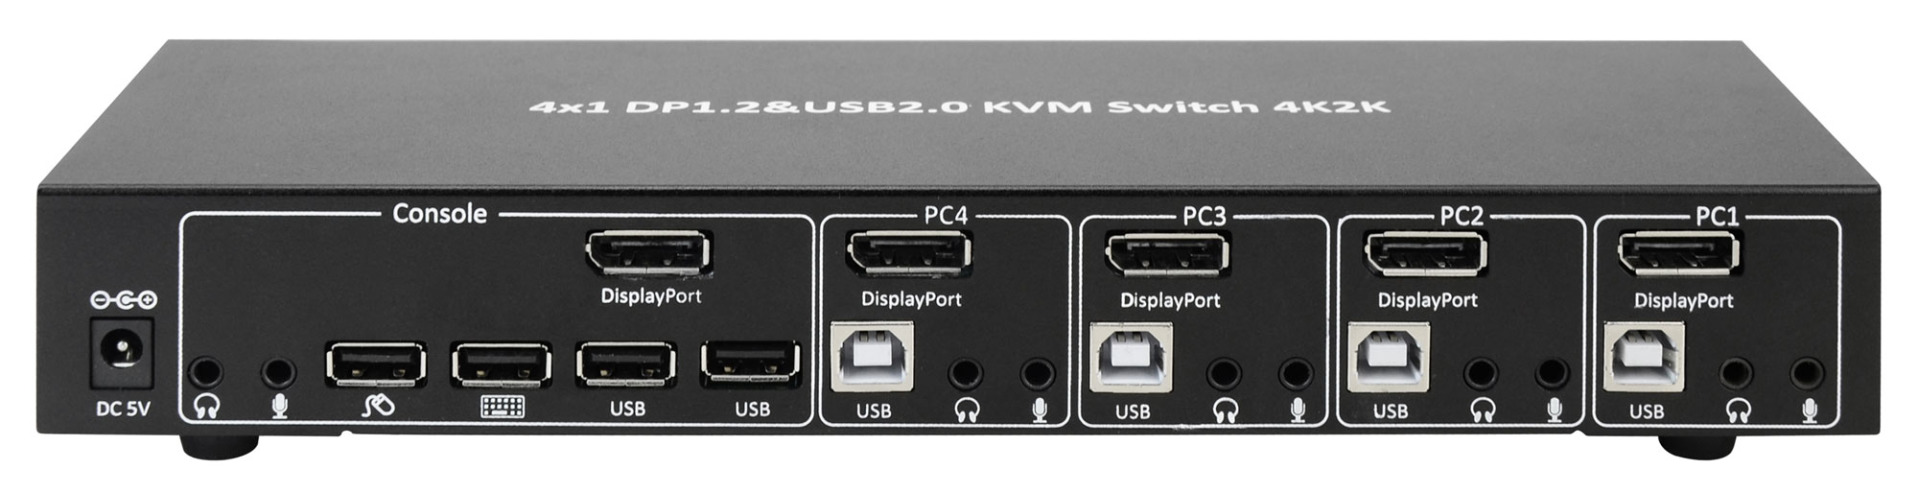 KVM switch DisplayPort 1.2, 4 ways, Dual-View, with USB-Hub